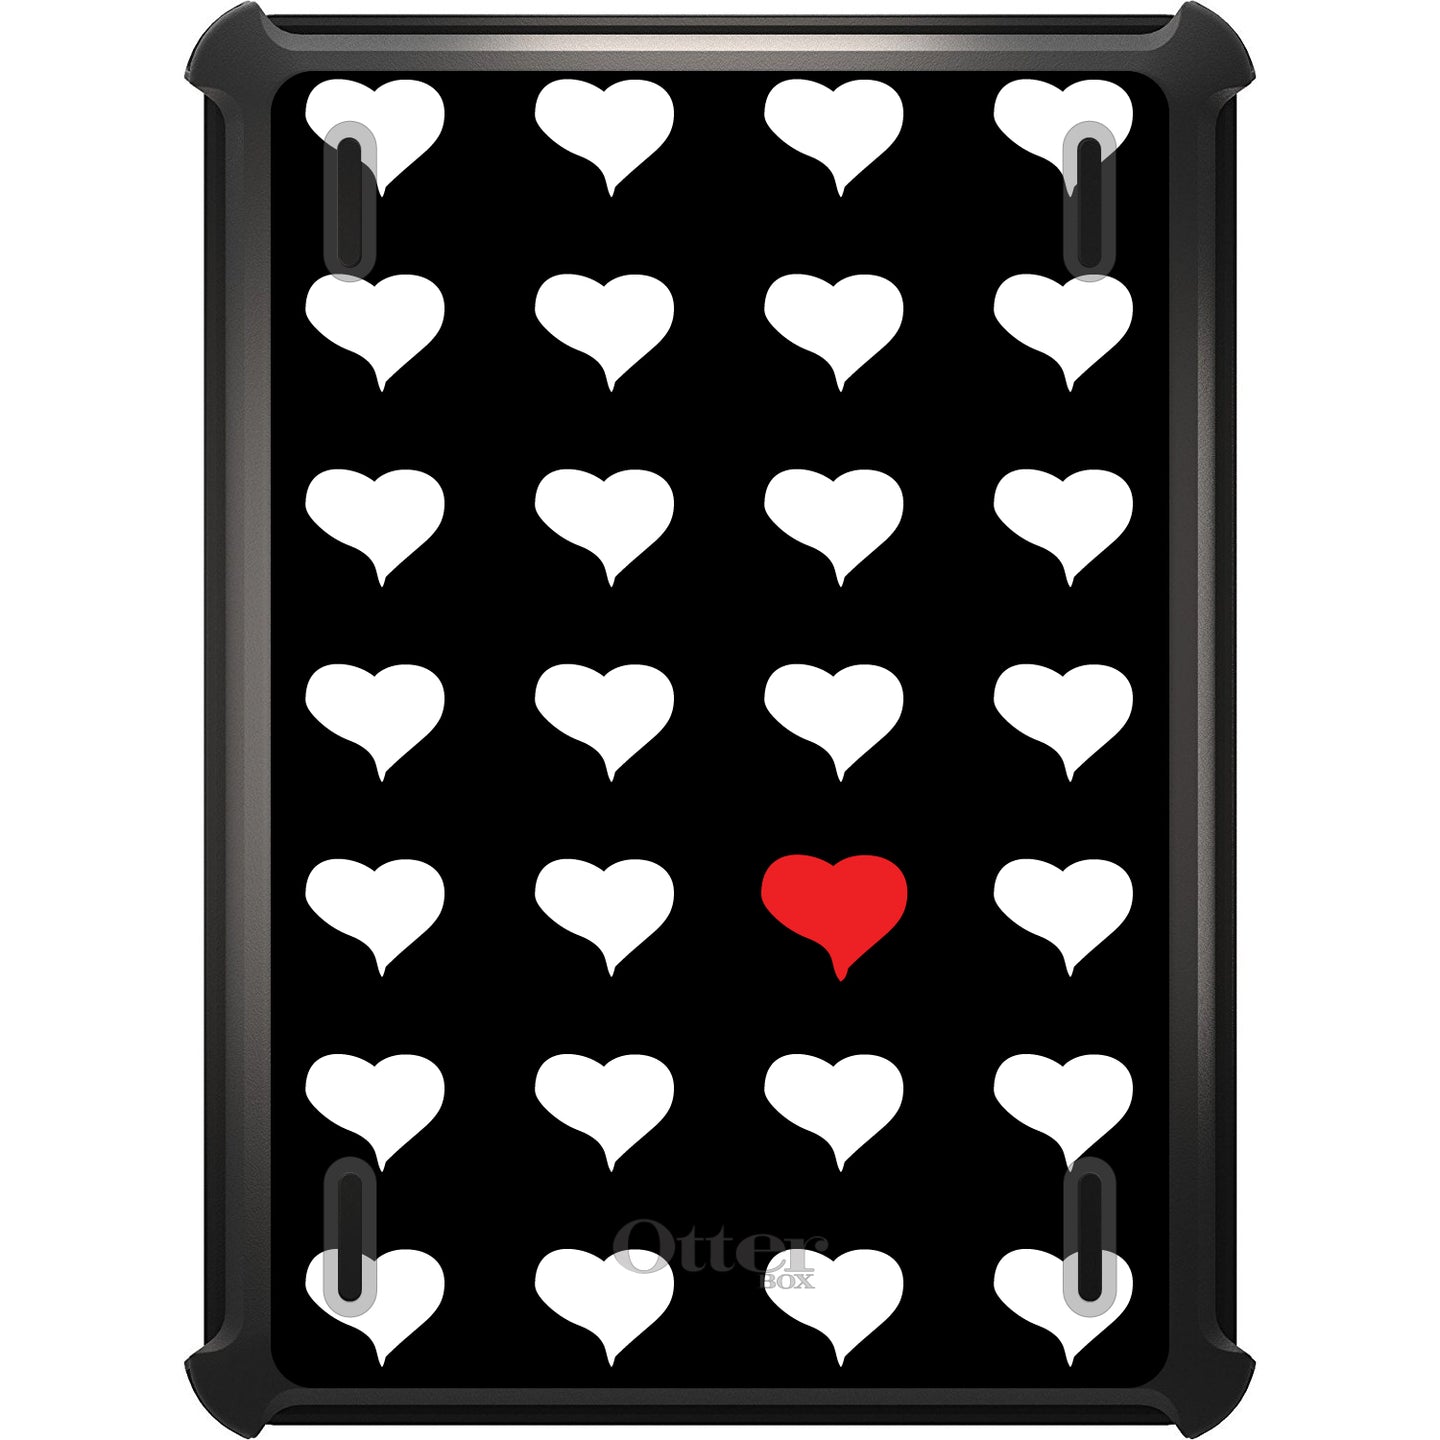 DistinctInk™ OtterBox Defender Series Case for Apple iPad / iPad Pro / iPad Air / iPad Mini - Red White Black Repeating Hearts